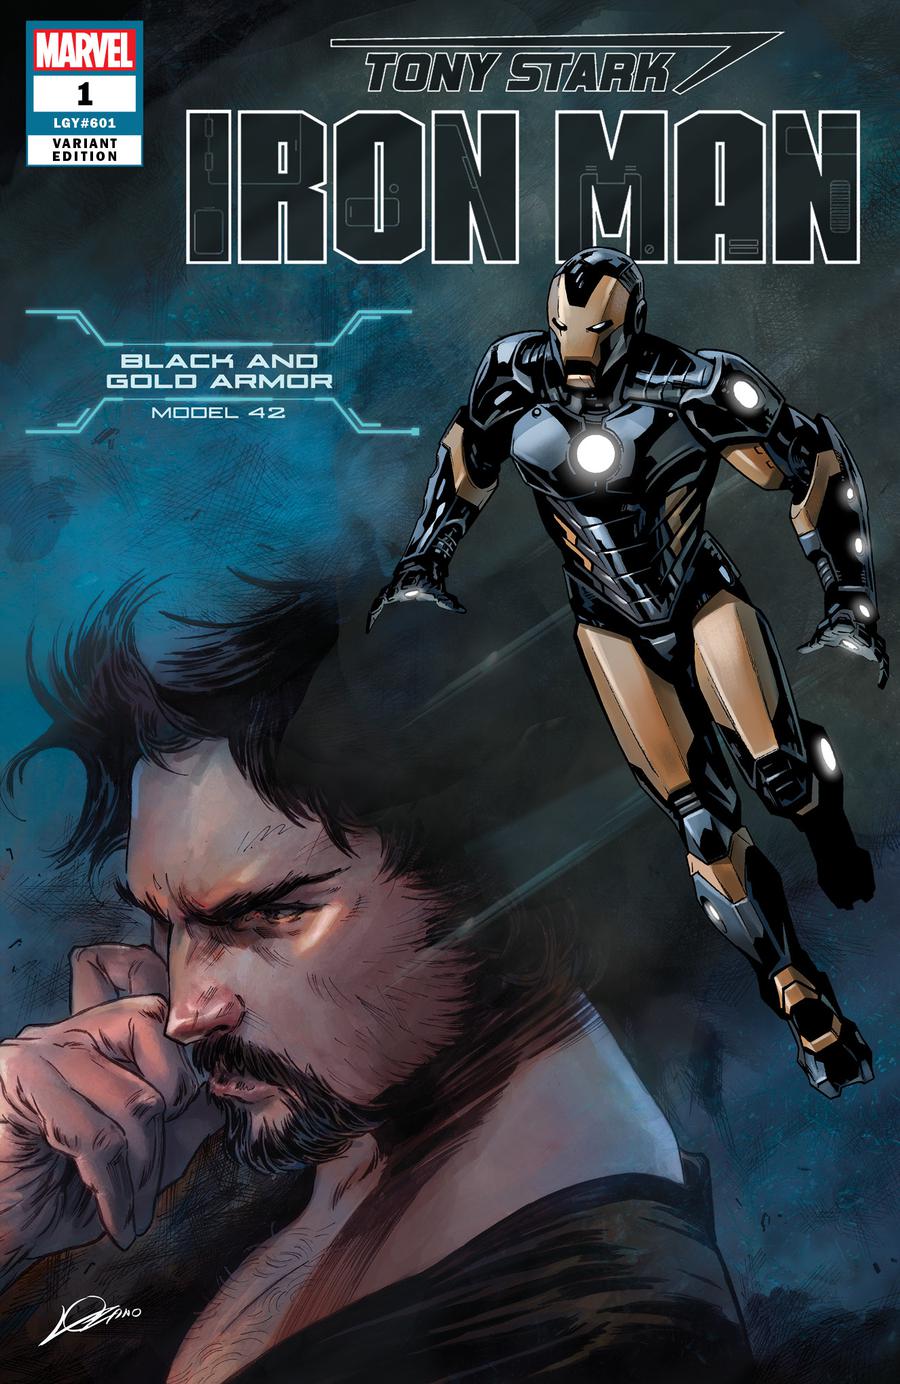 Tony Stark Iron Man #1 Cover D Variant Alexander Lozano & Valerio Schiti Model 42 Black And Gold Armor Cover